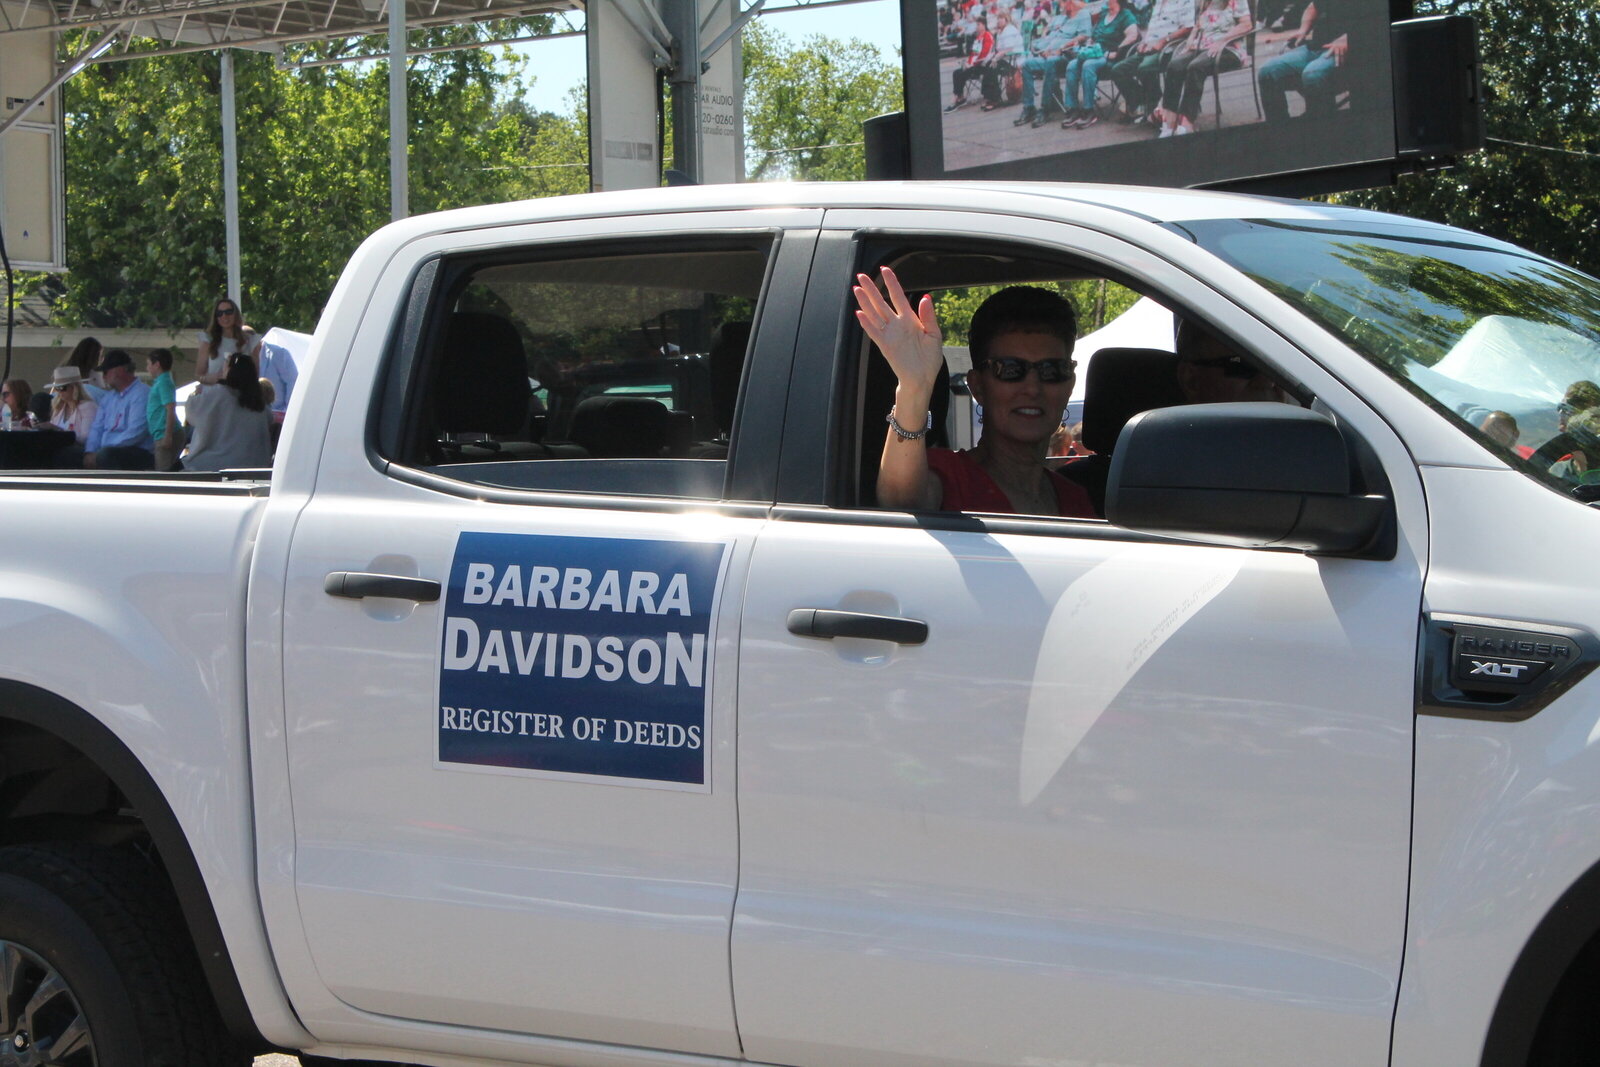 Barbara Davidson